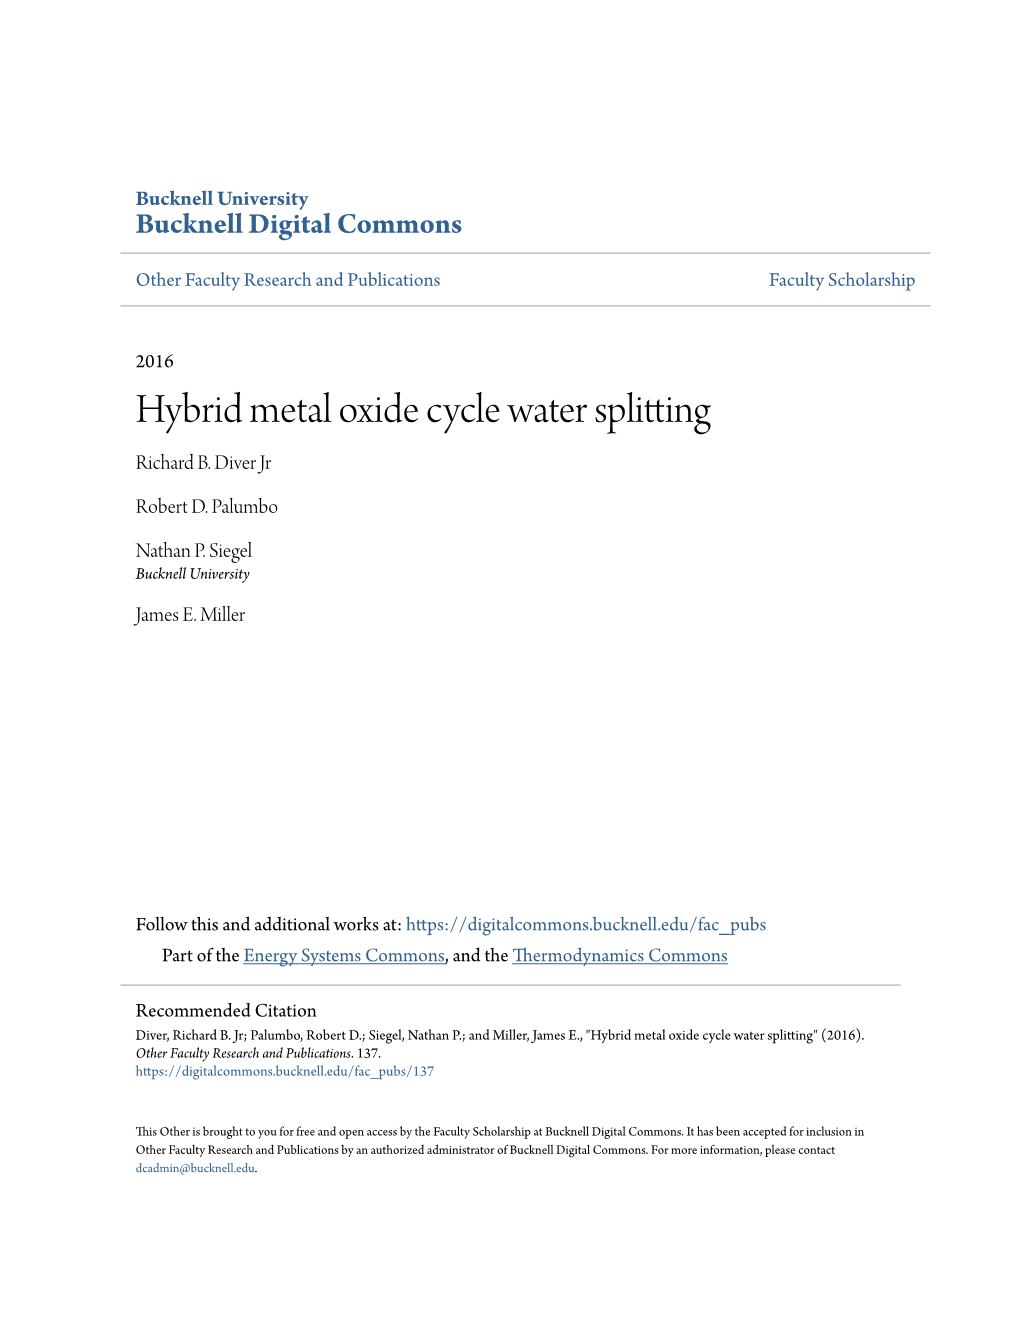 Hybrid Metal Oxide Cycle Water Splitting Richard B